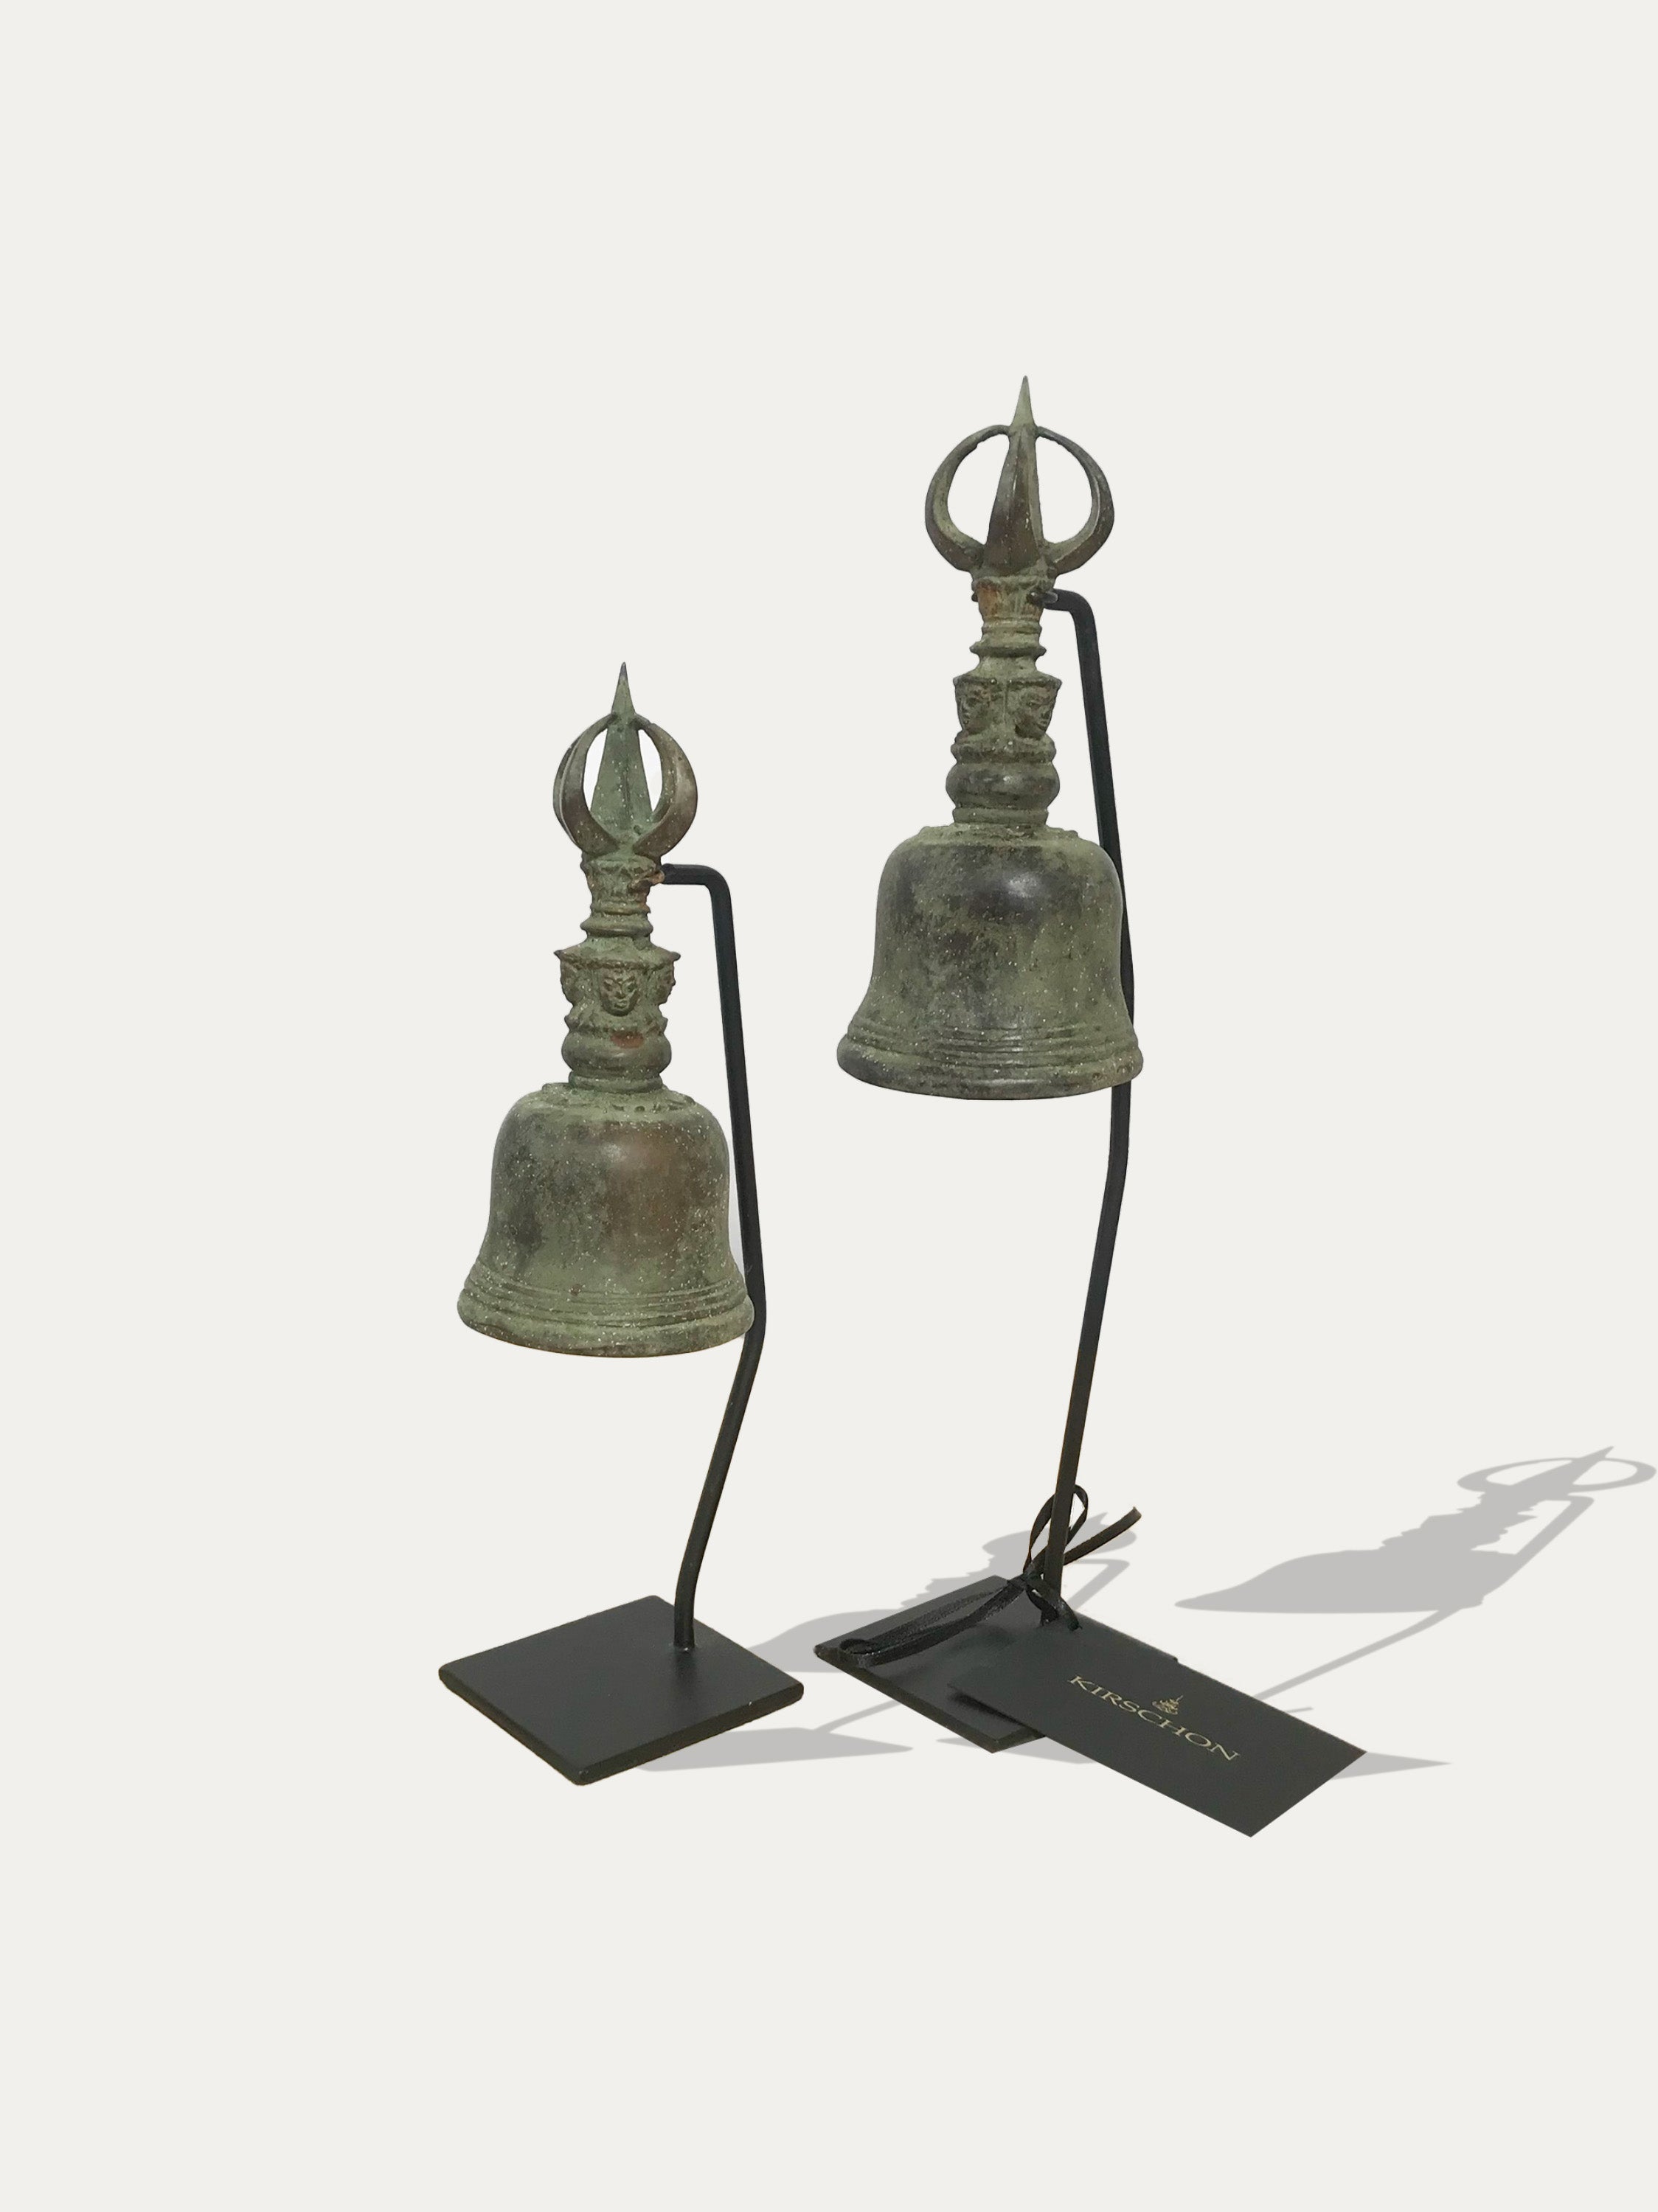 Ceremonial bells from Borneo - Asian Art from Kirschon